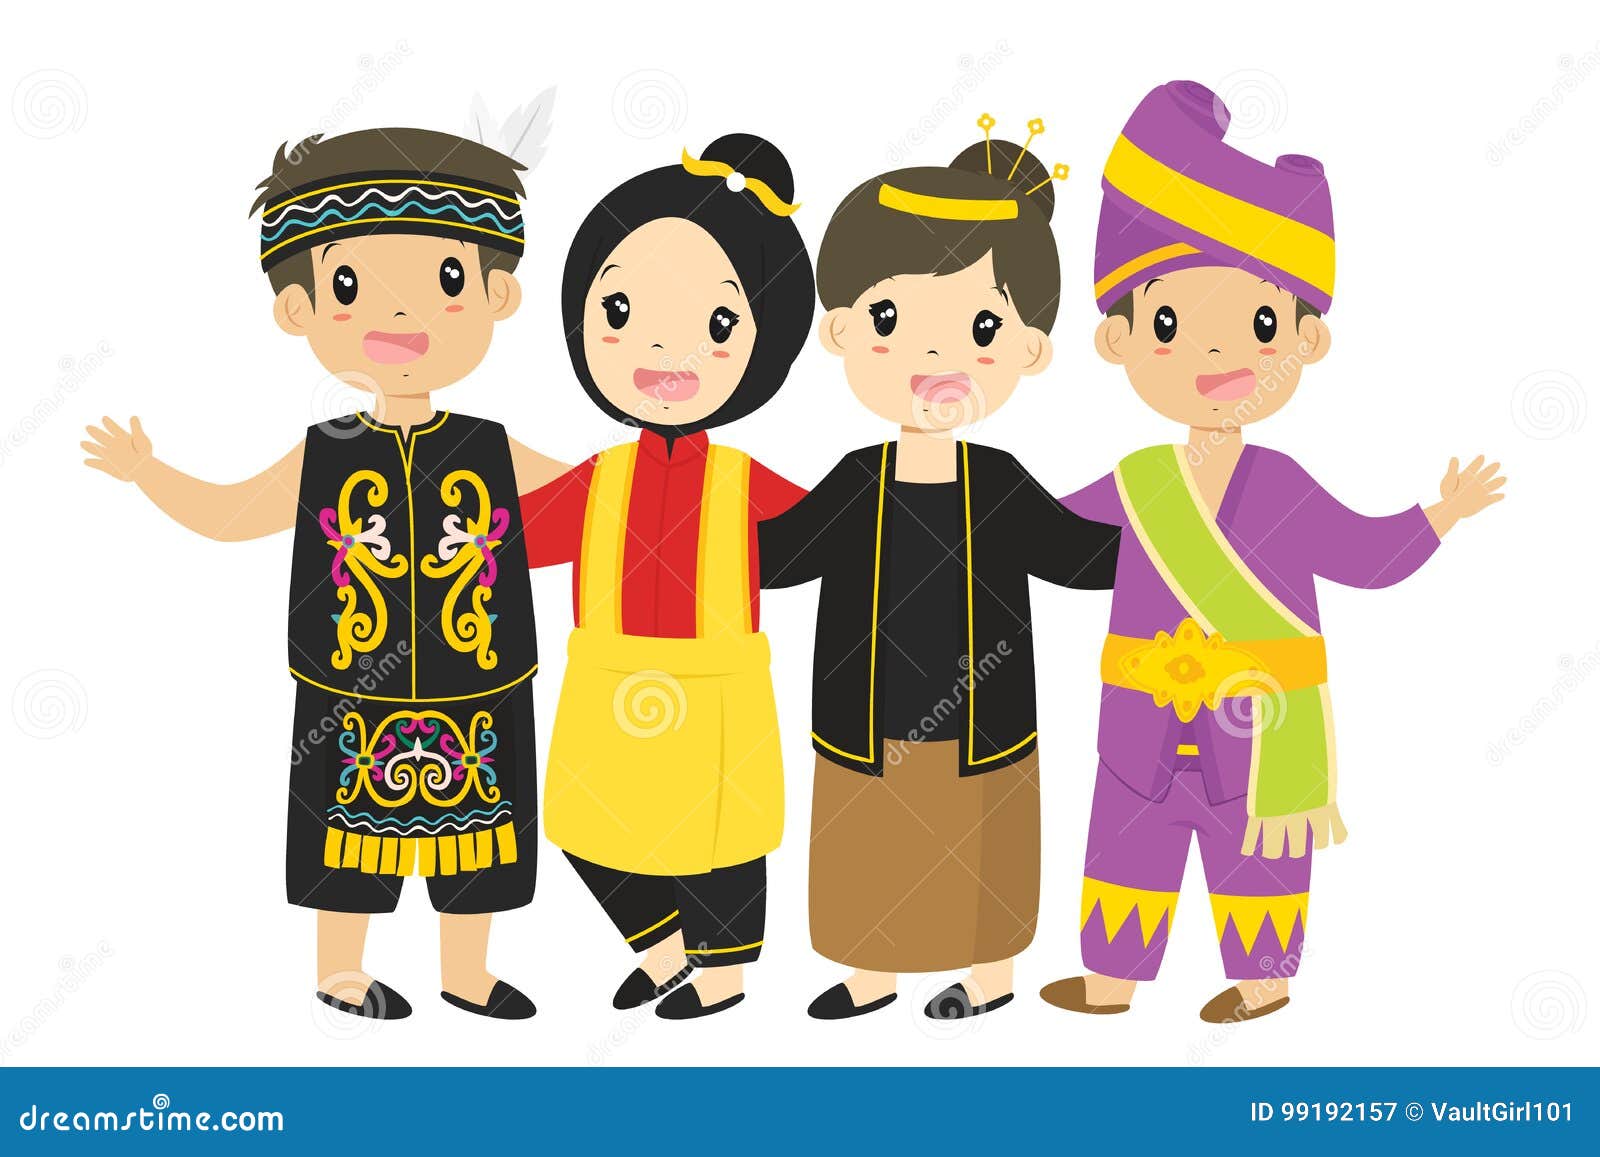 indonesian boys and girls wearing traditional dress cartoon 